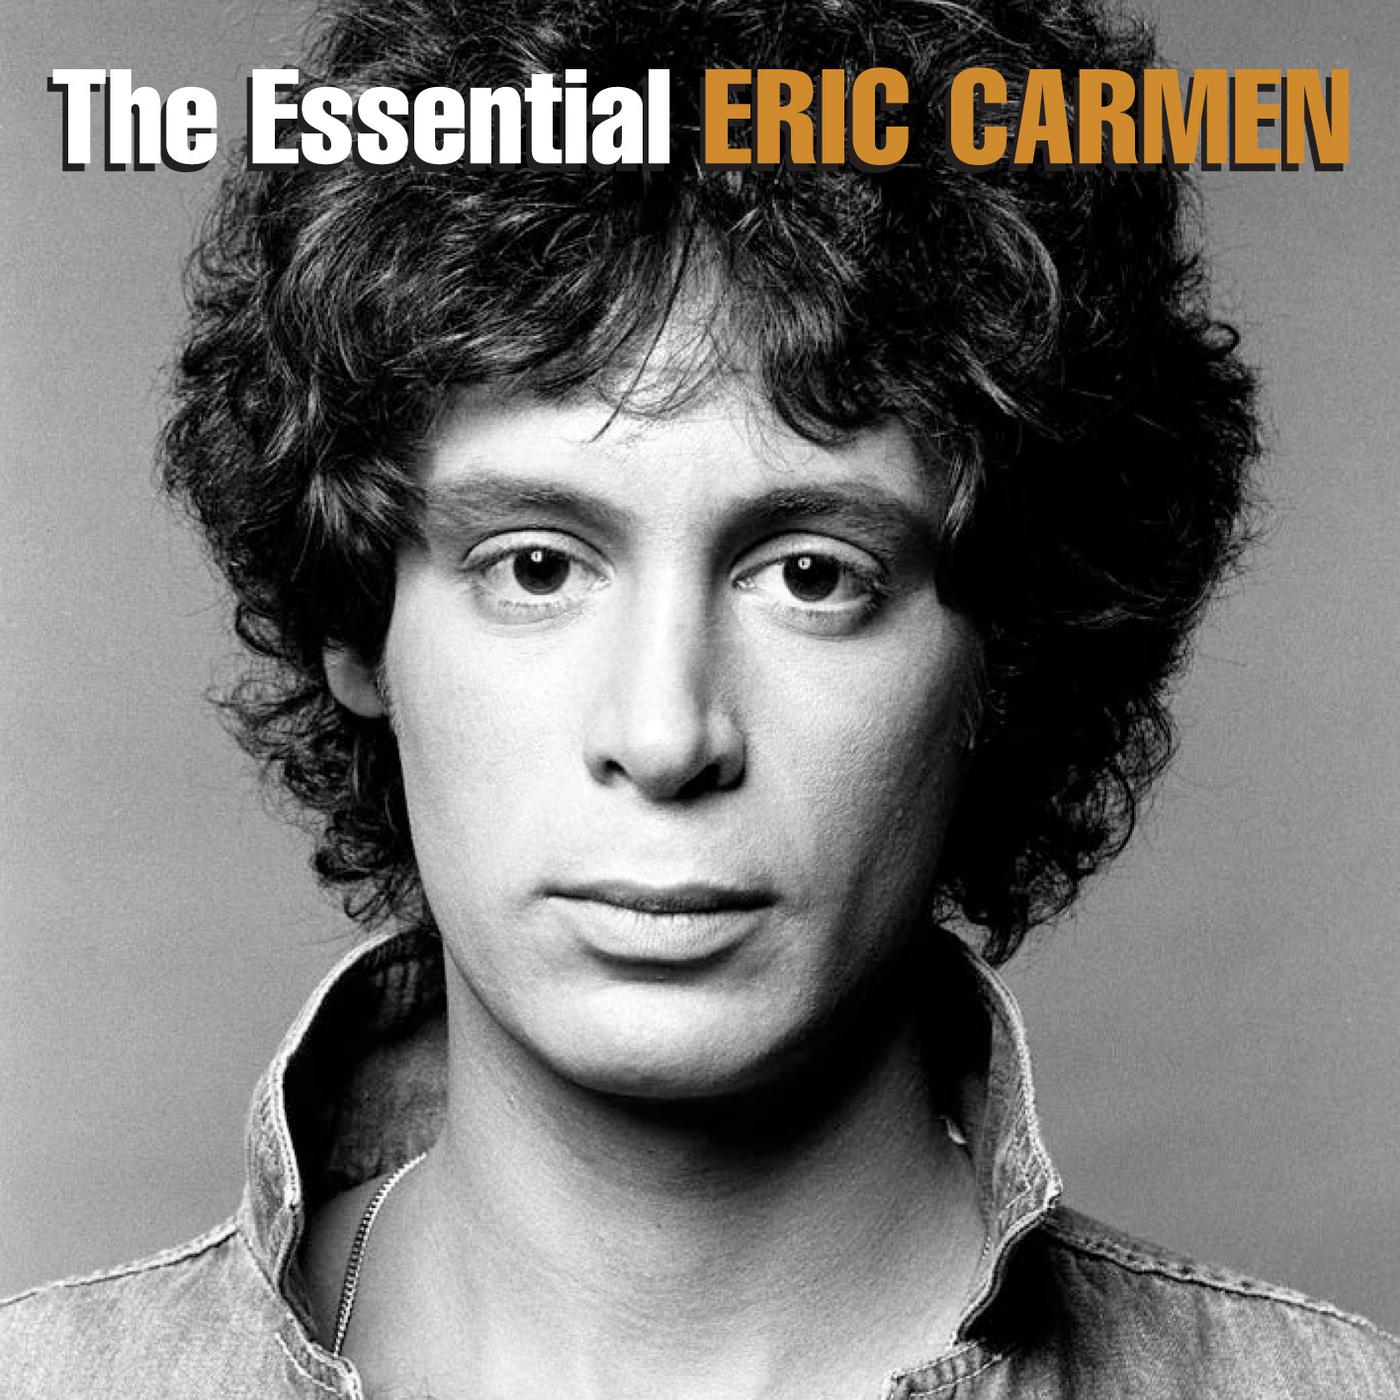 Eric Carmen - Starting Over (Live at the Bottom Line, New York, NY - April 1976)